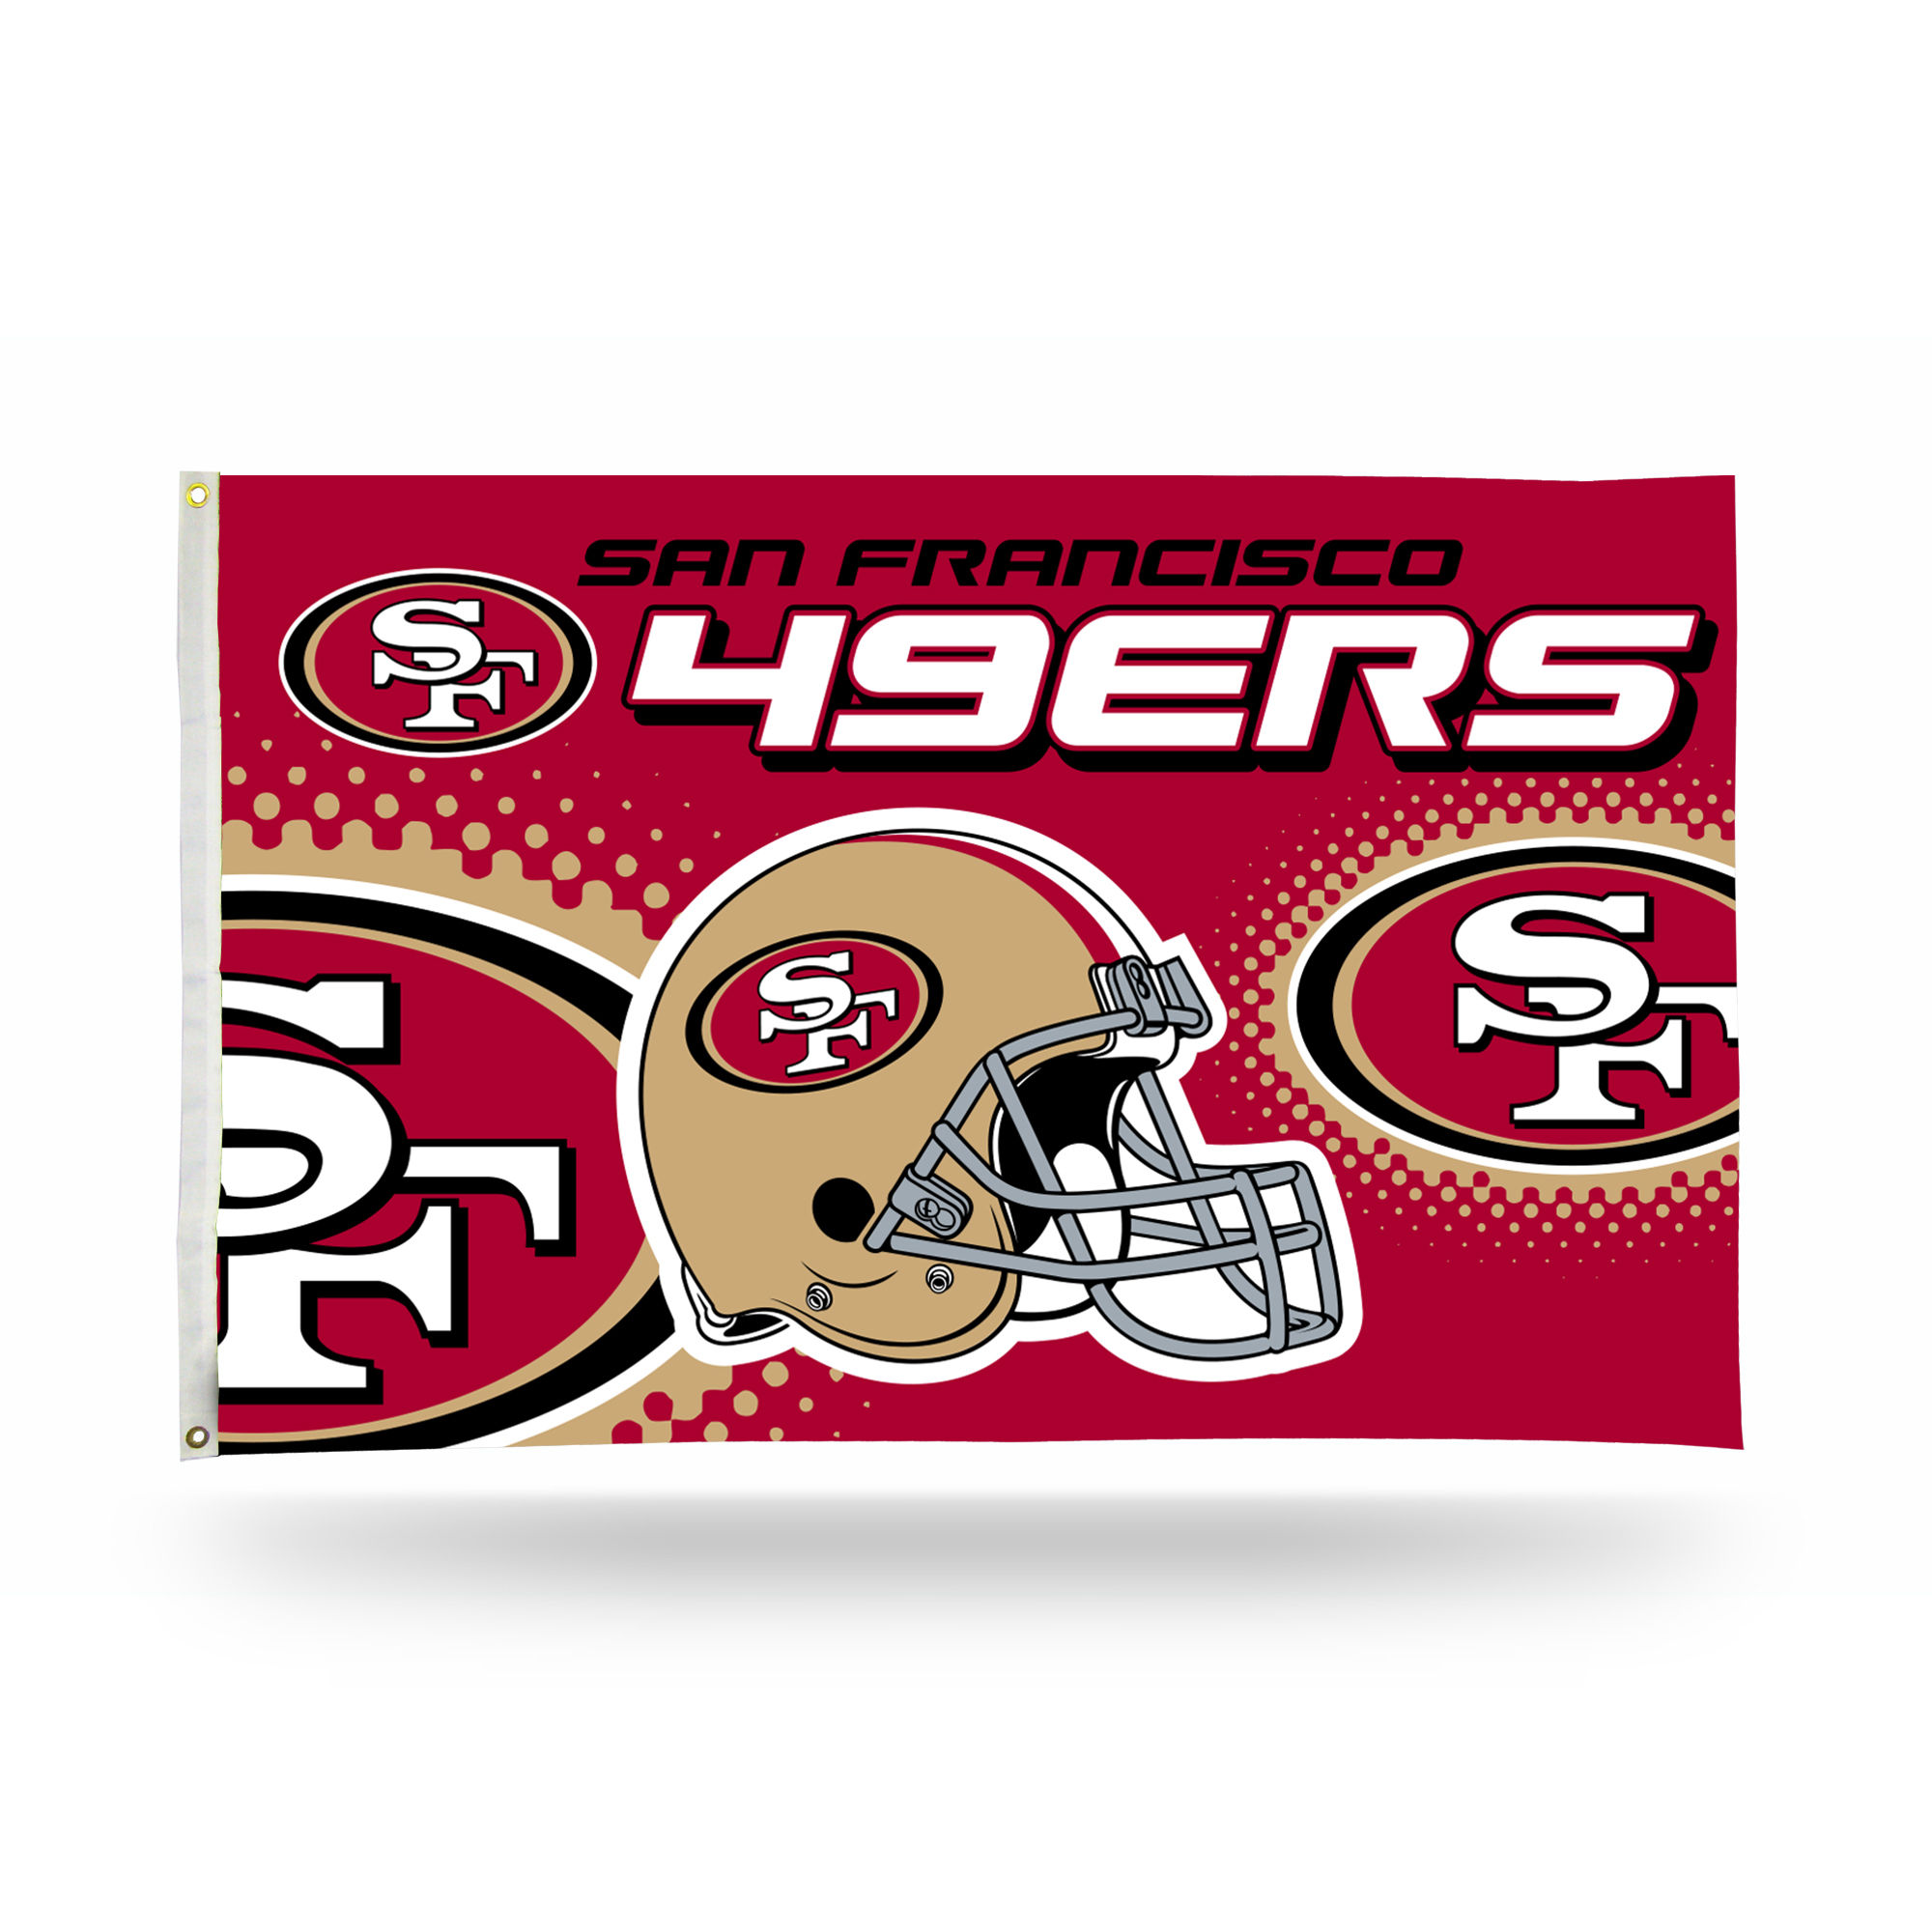 Rico NFL Rico Industries San Francisco 49ers Helmet 3' x 5' Banner Flag